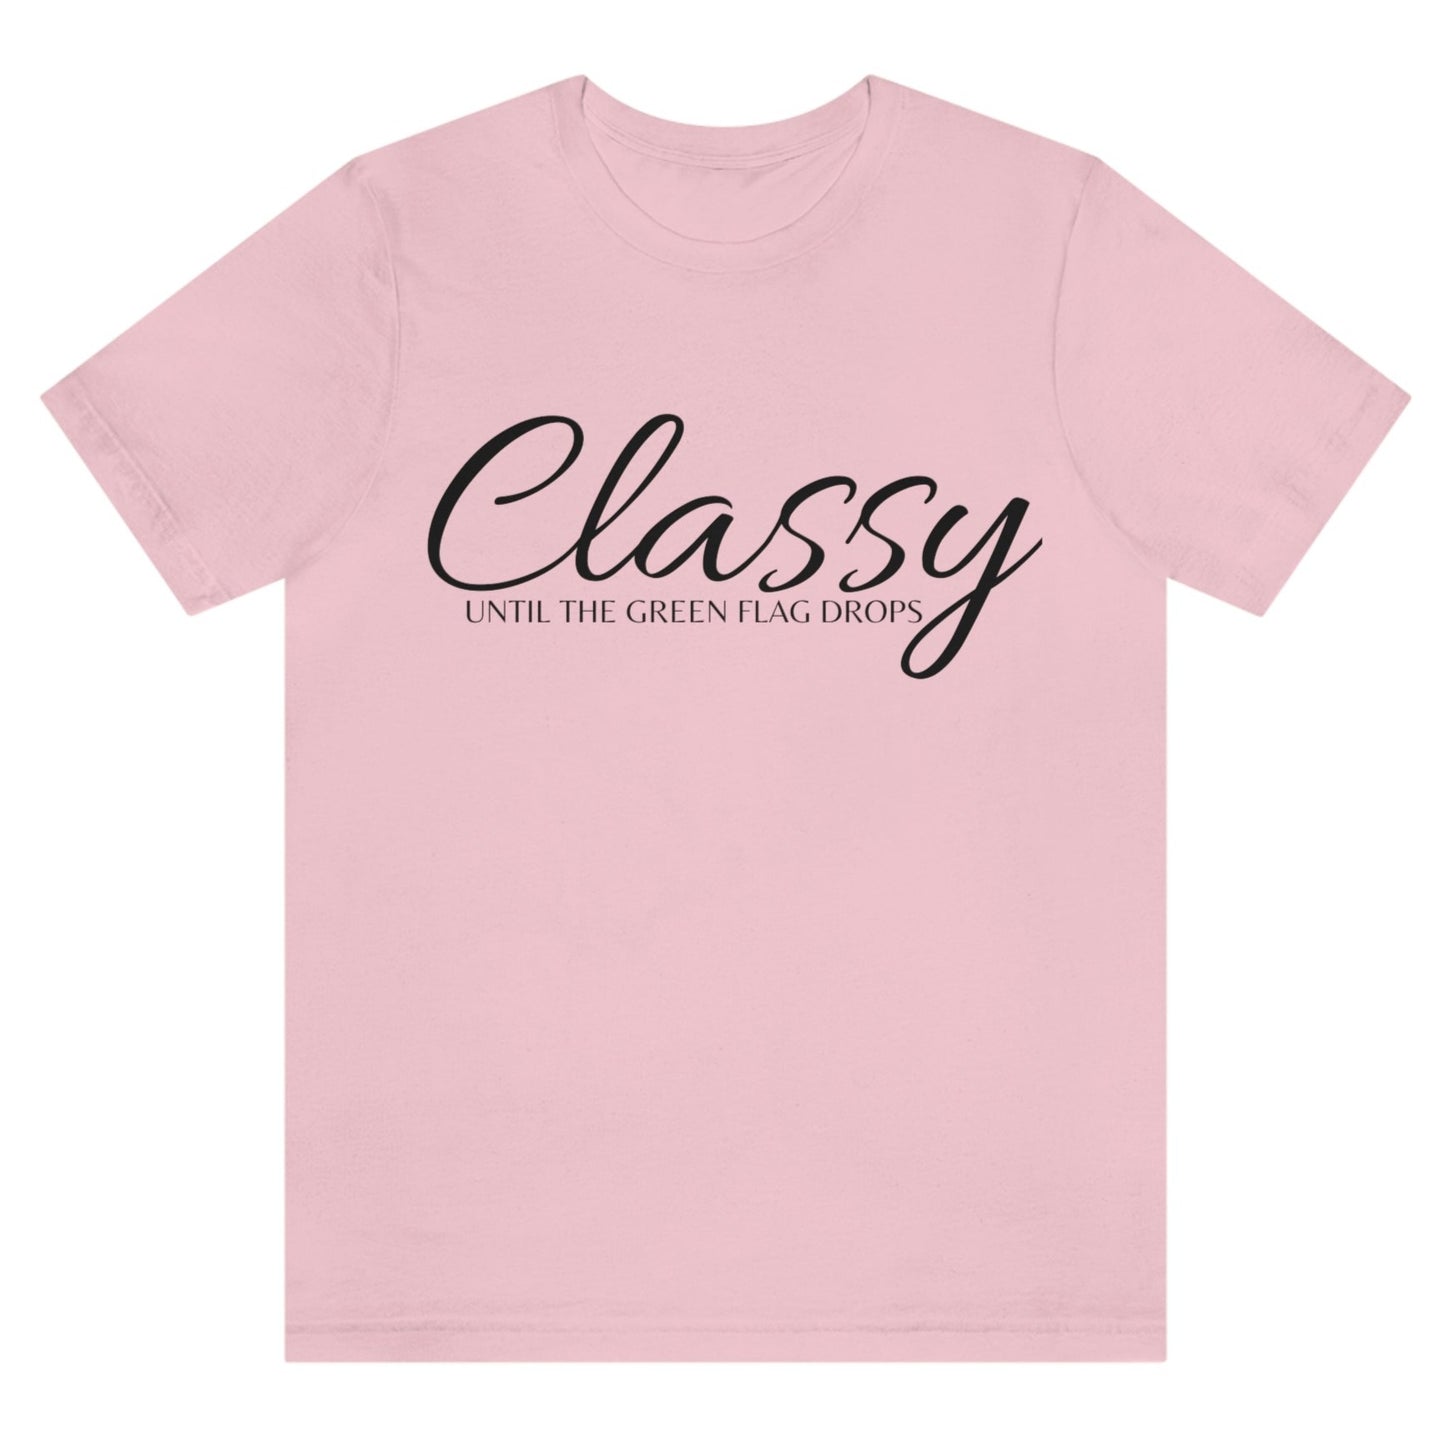 classy-until-the-green-flag-drops-pink-t-shirt-racing-womens